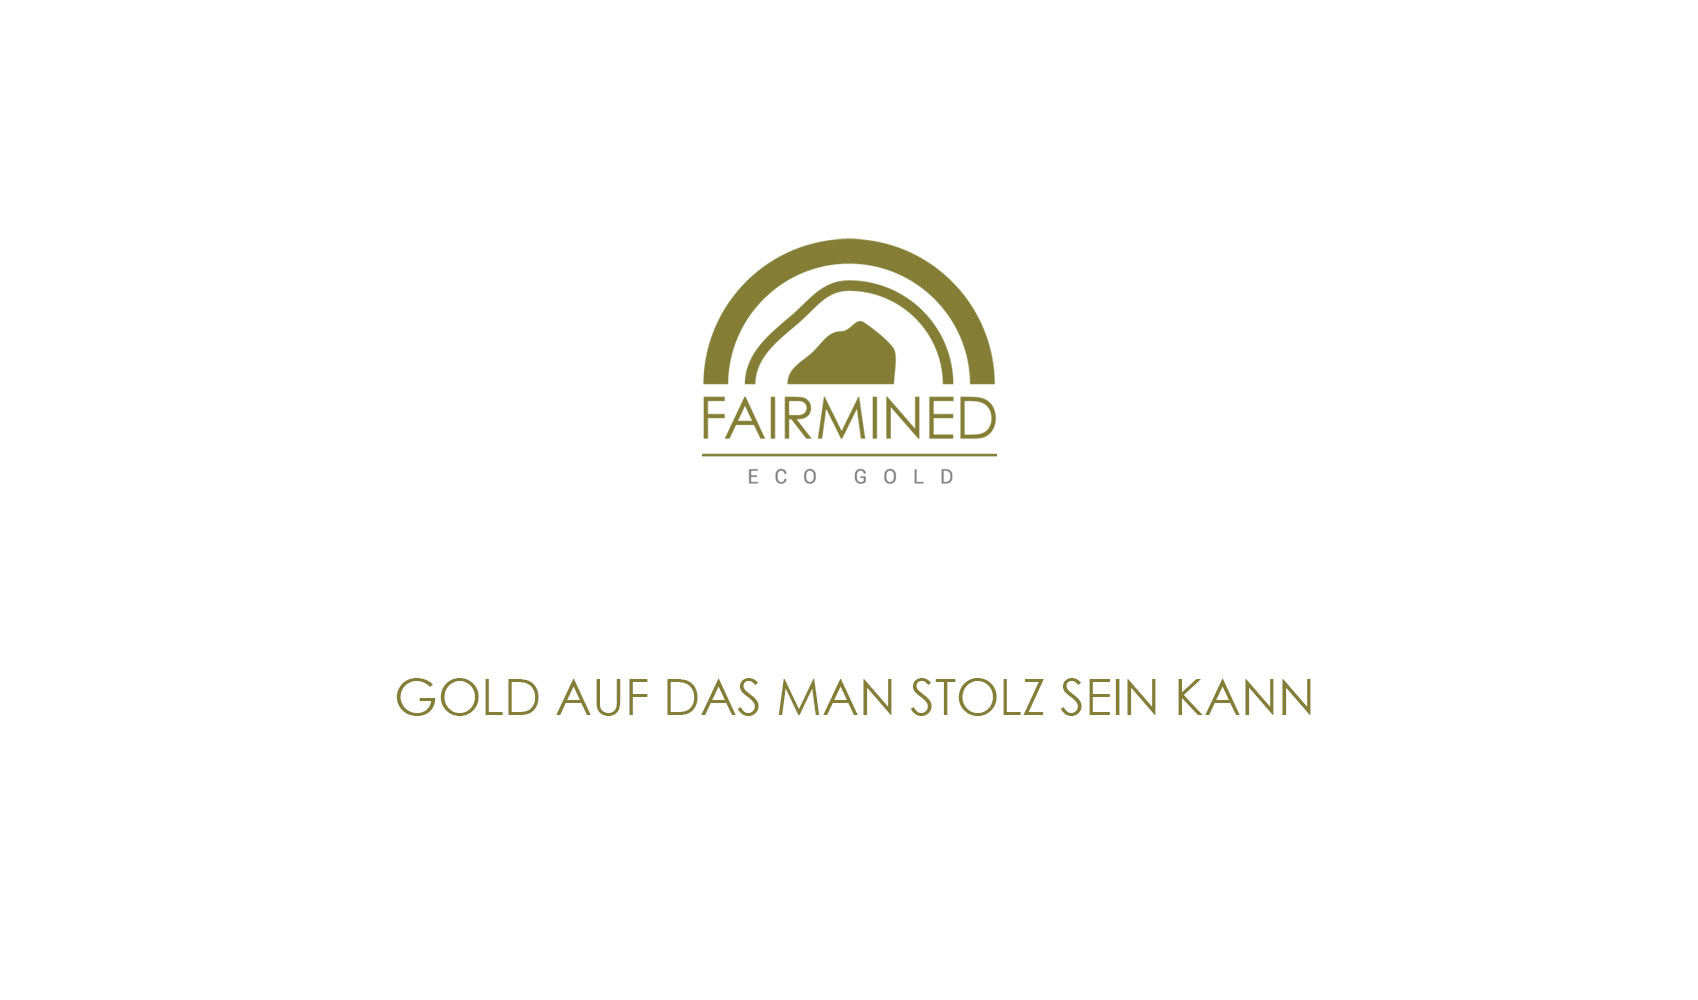 GOLDAFFAIRS - Fairmined Eco Gold aus Peru